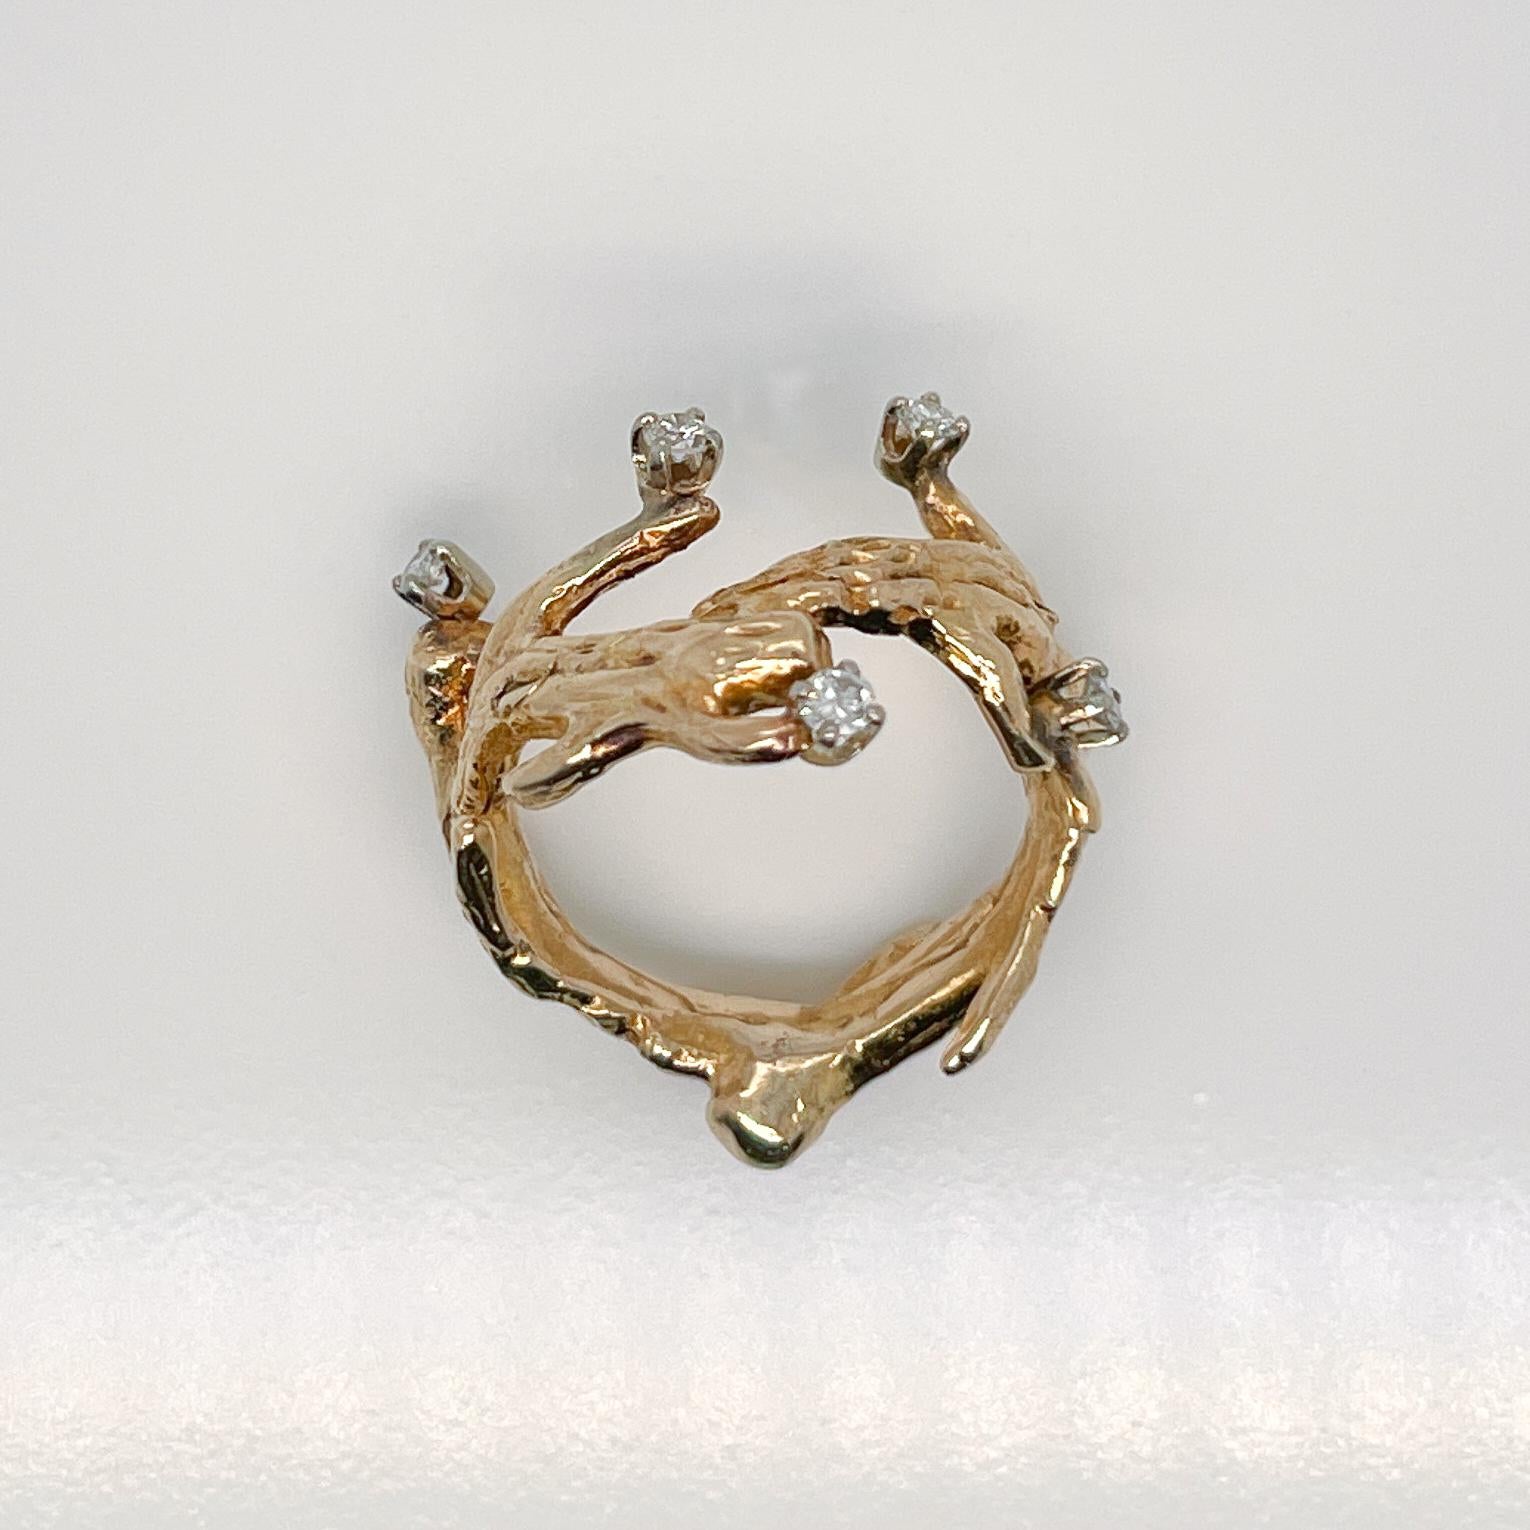 Modernist Studio Handcrafted 10 Karat Gold & Diamond Ring For Sale 1